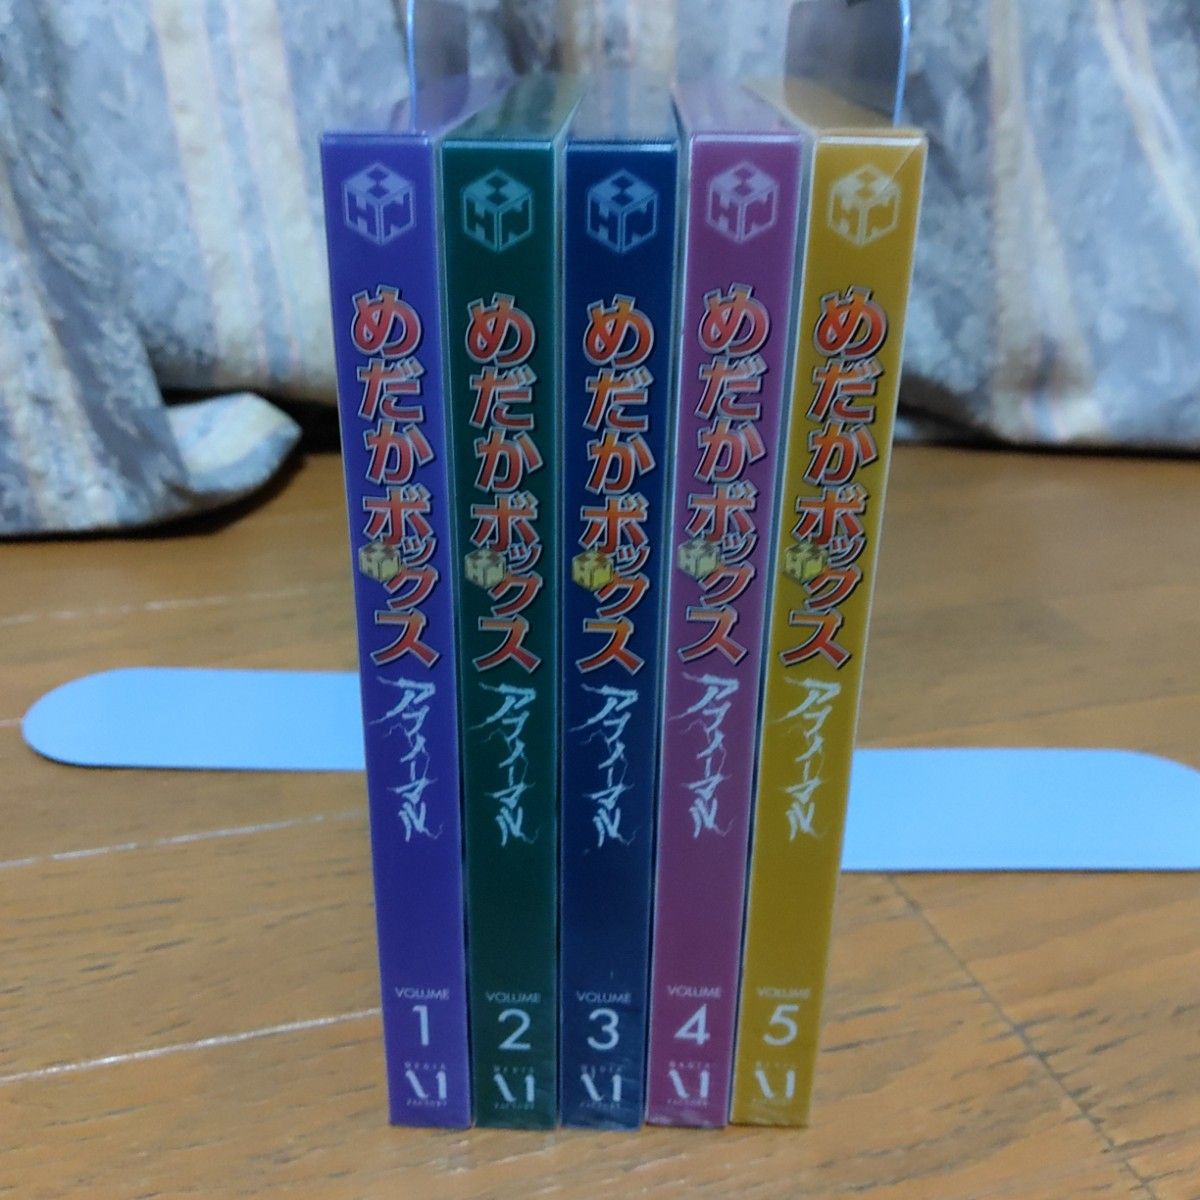 Blu-ray めだかボックス アブノーマル初回生産限定版 1巻から5巻